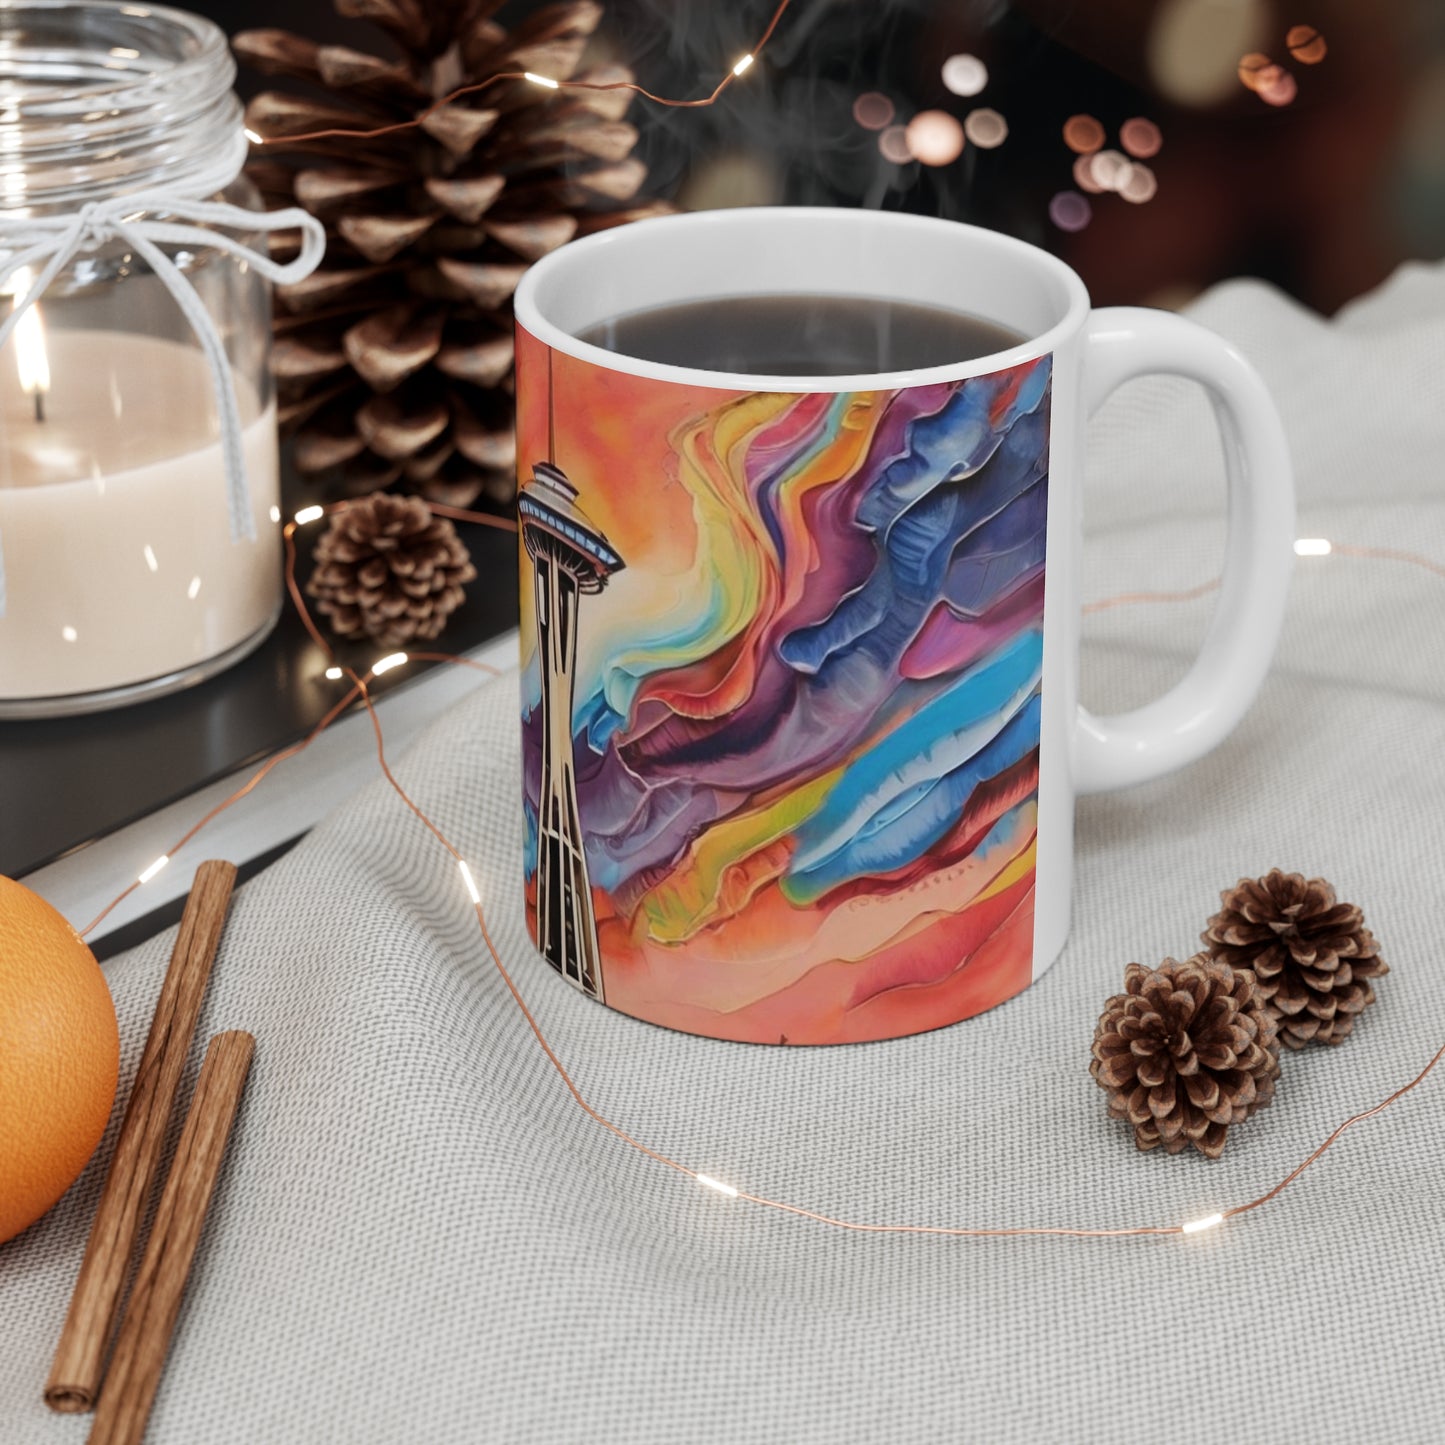 Space Needle (Seattle USA) Artwork Mug - Ceramic Coffee Mug 11oz